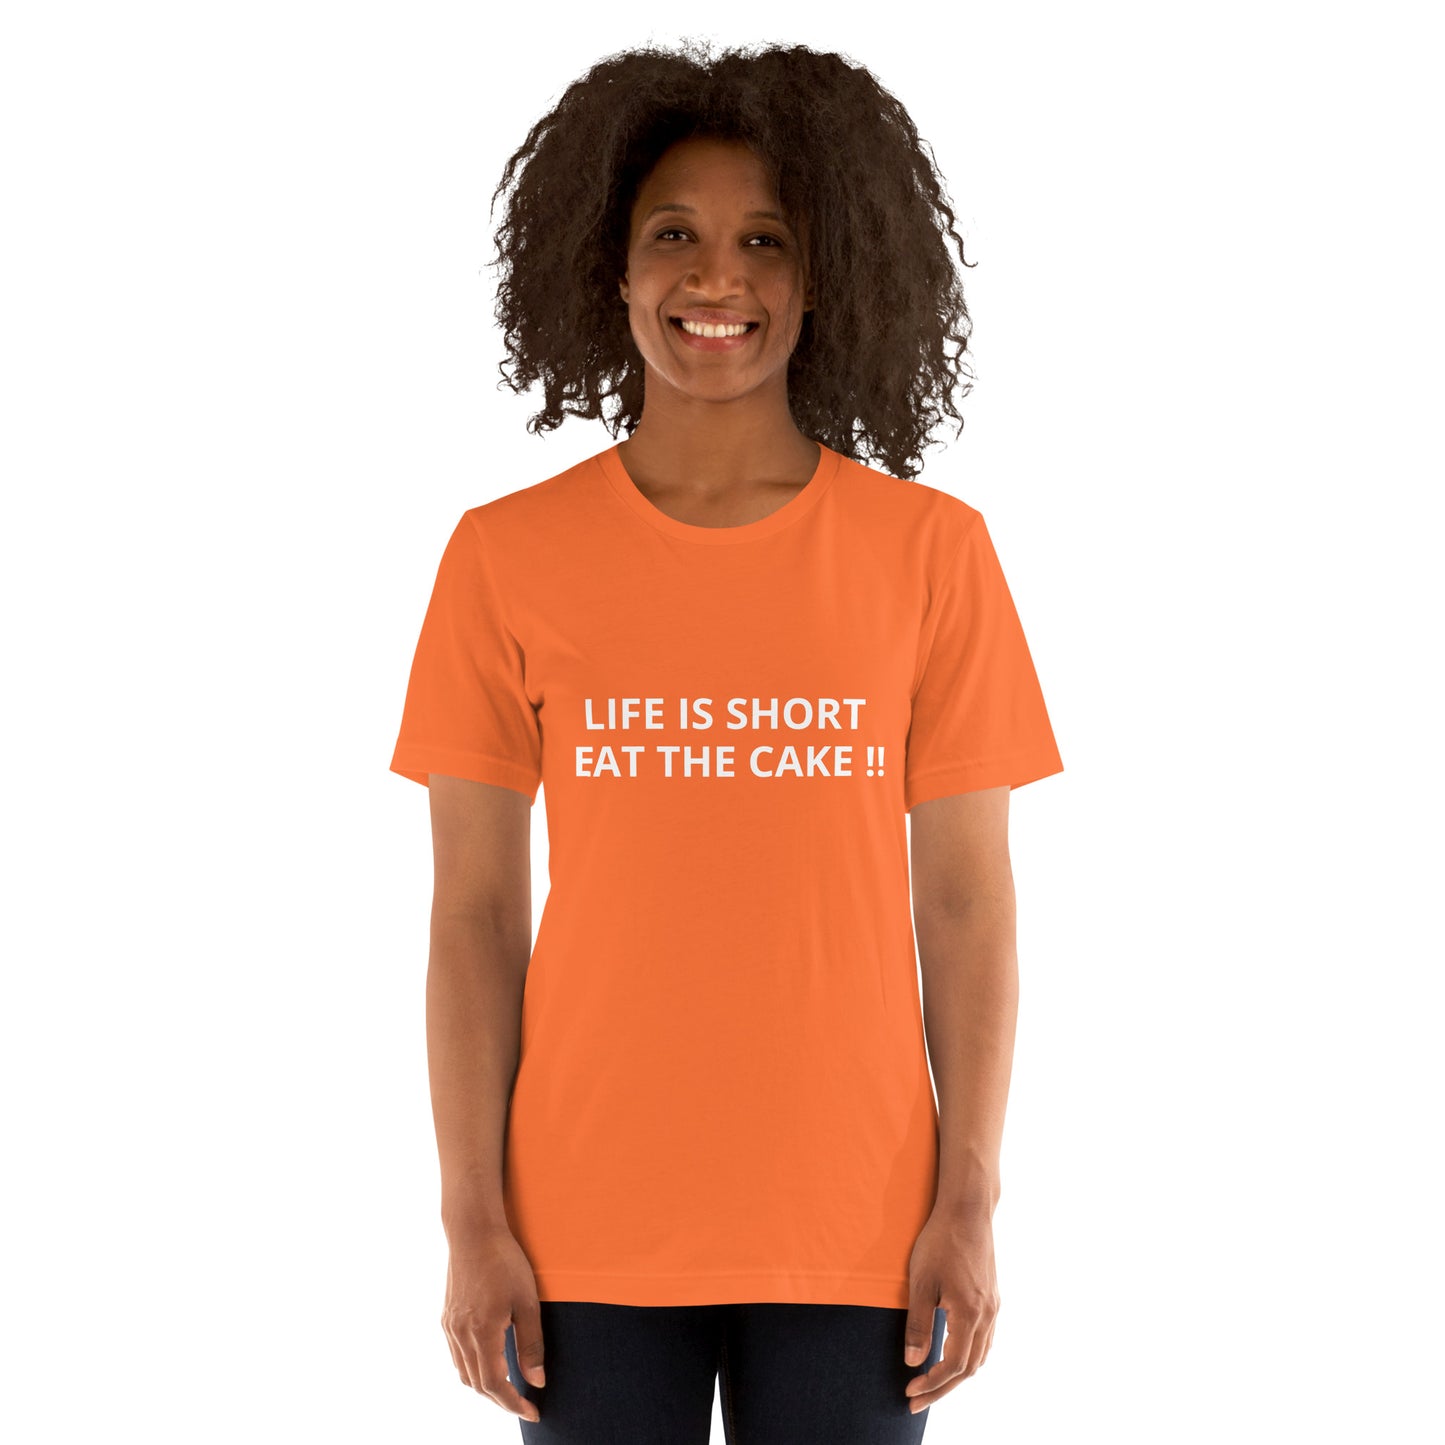 LIFE IS SHORT EAT THE CAKE !! Unisex t-shirt